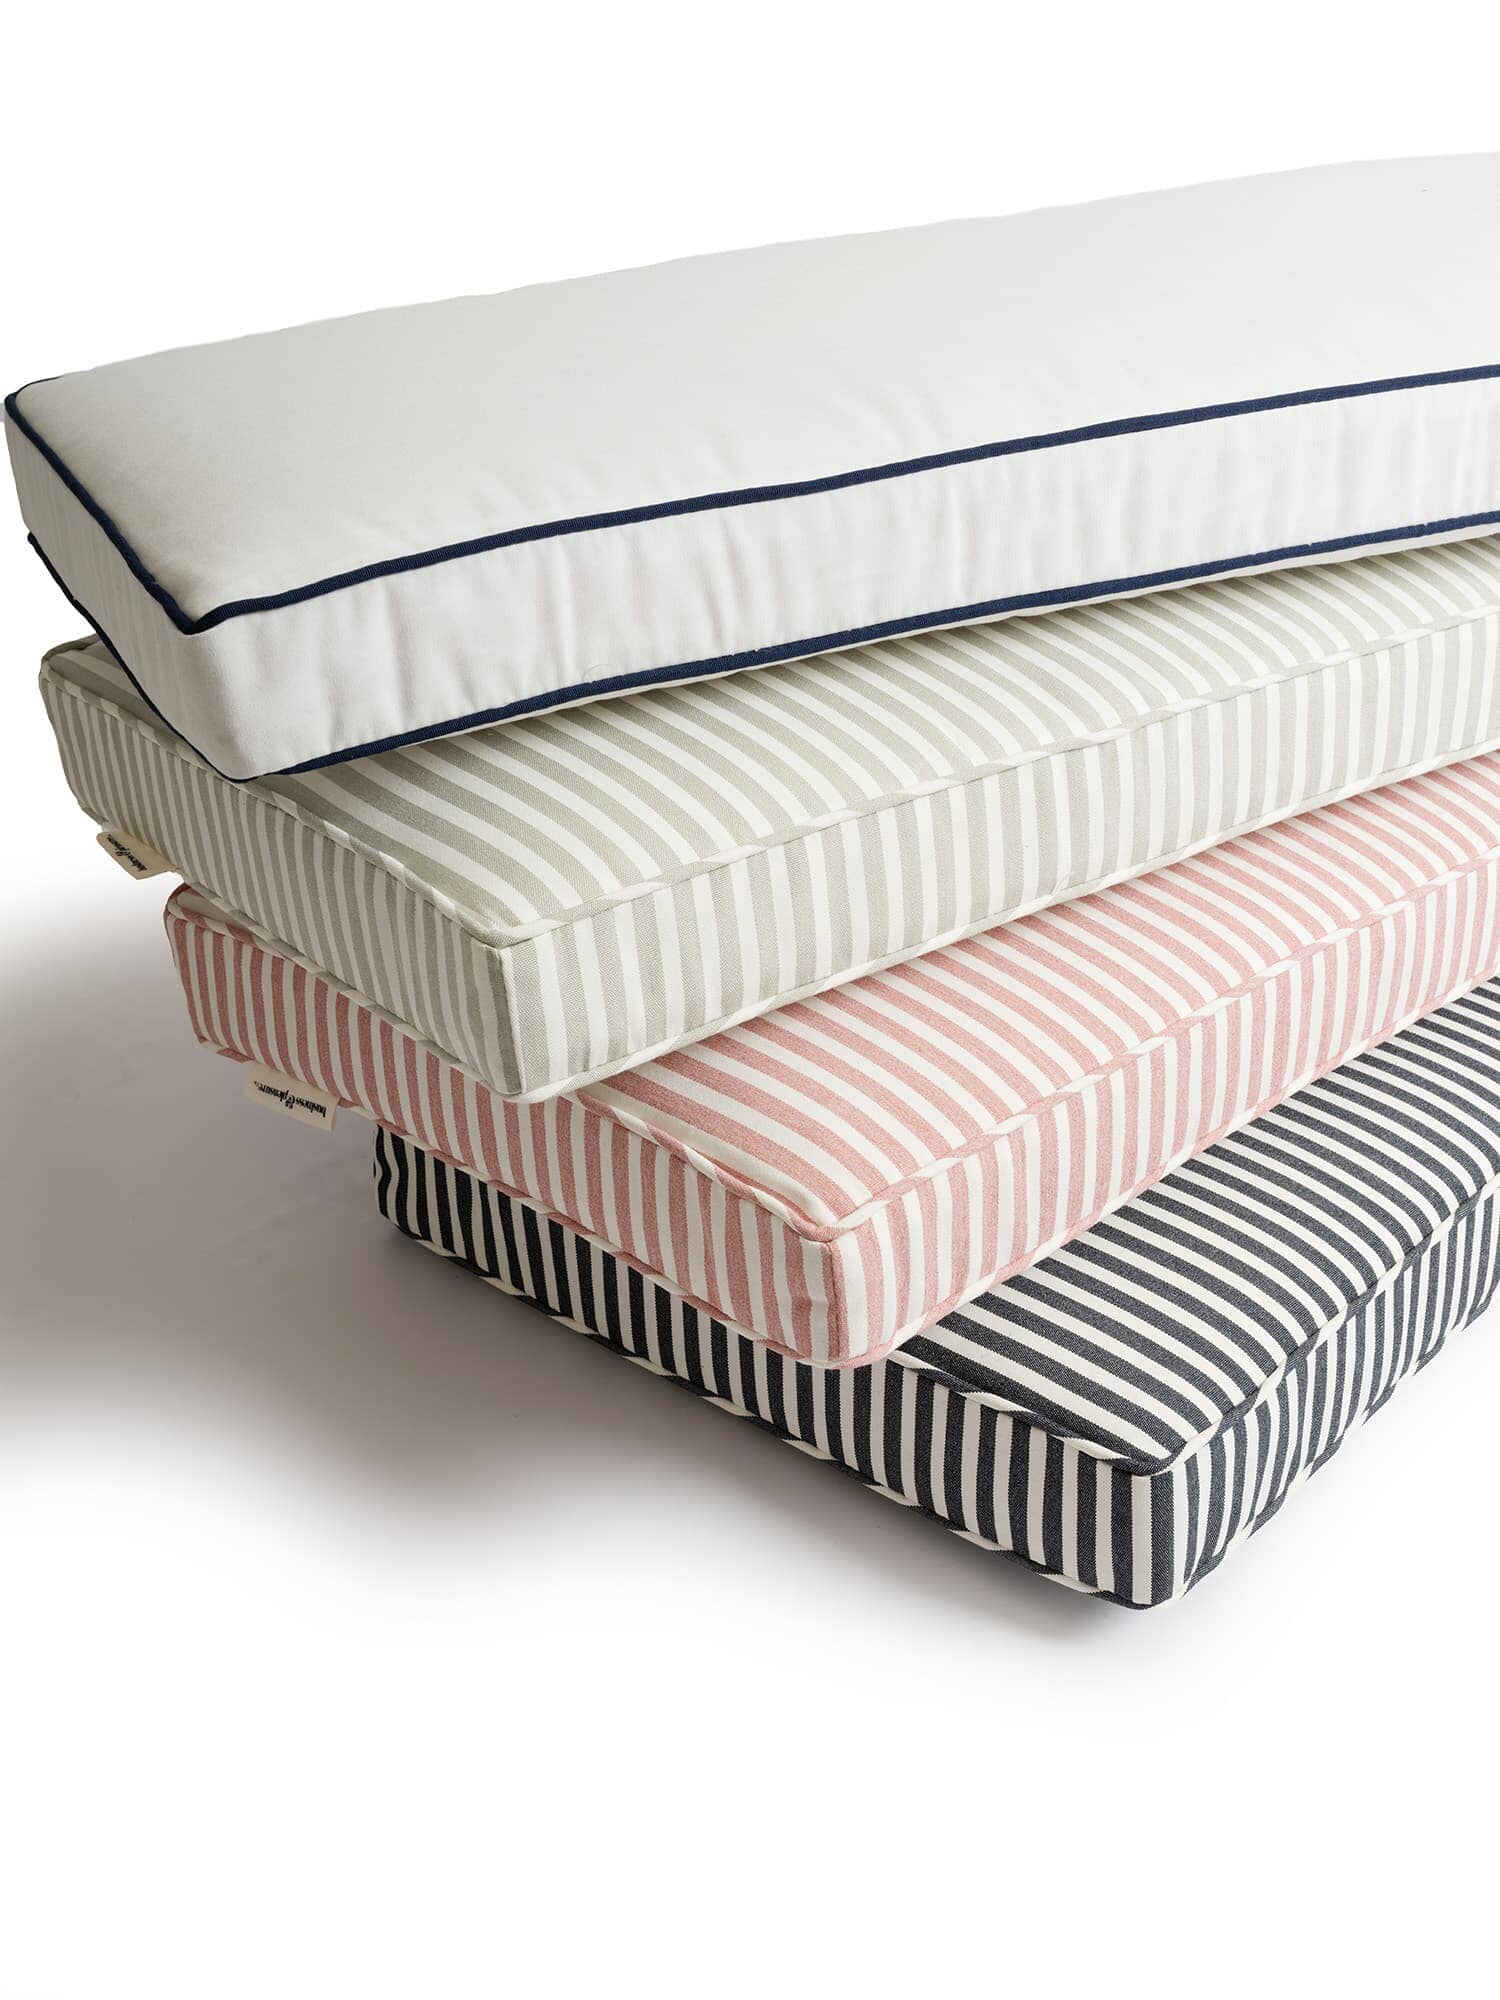 The Bench Pillow - Lauren's Sage Stripe